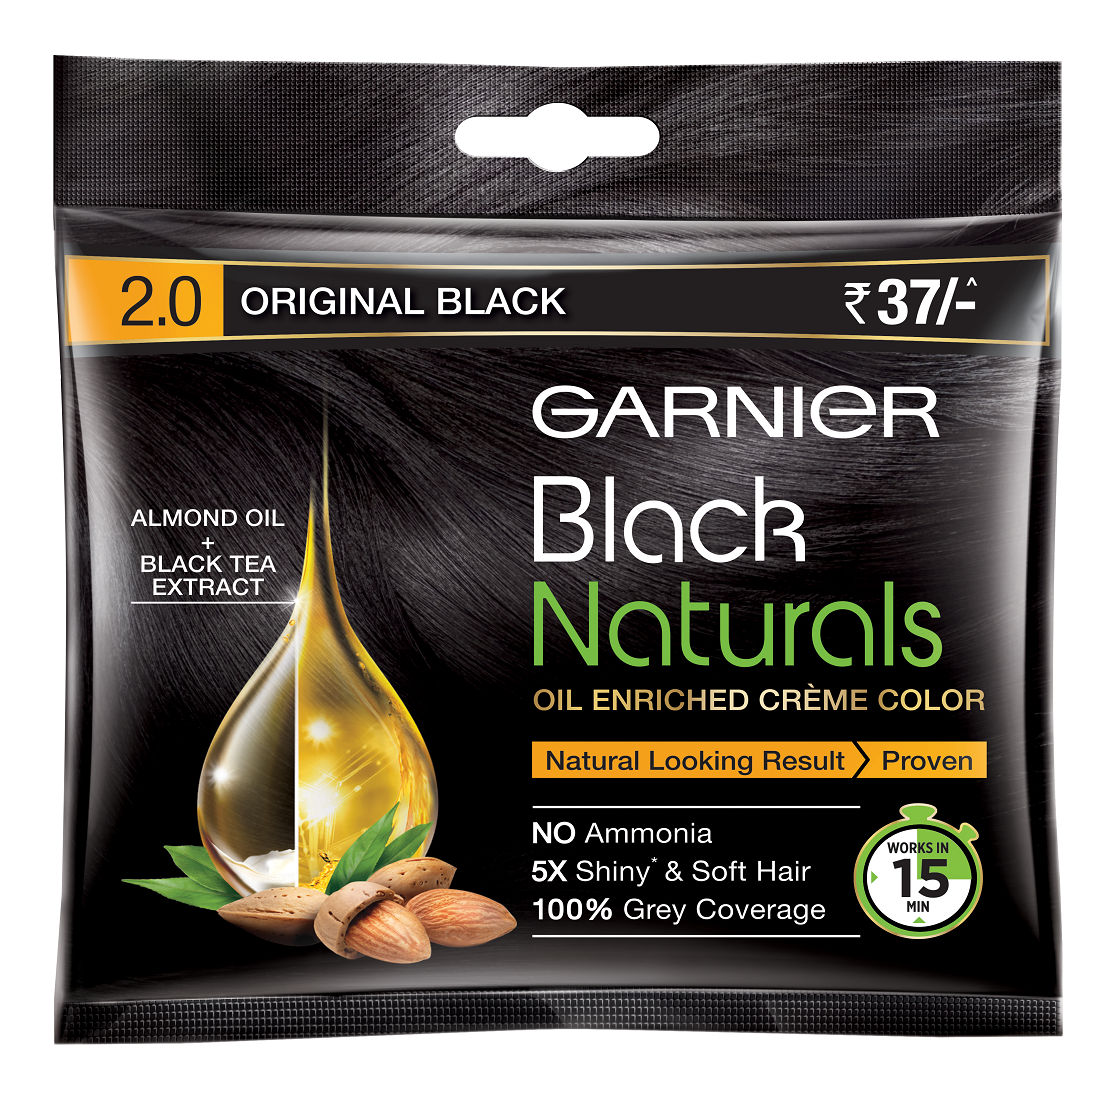 Buy Garnier Black Naturals, Original Black, Shade 2.0, 20 ml Online